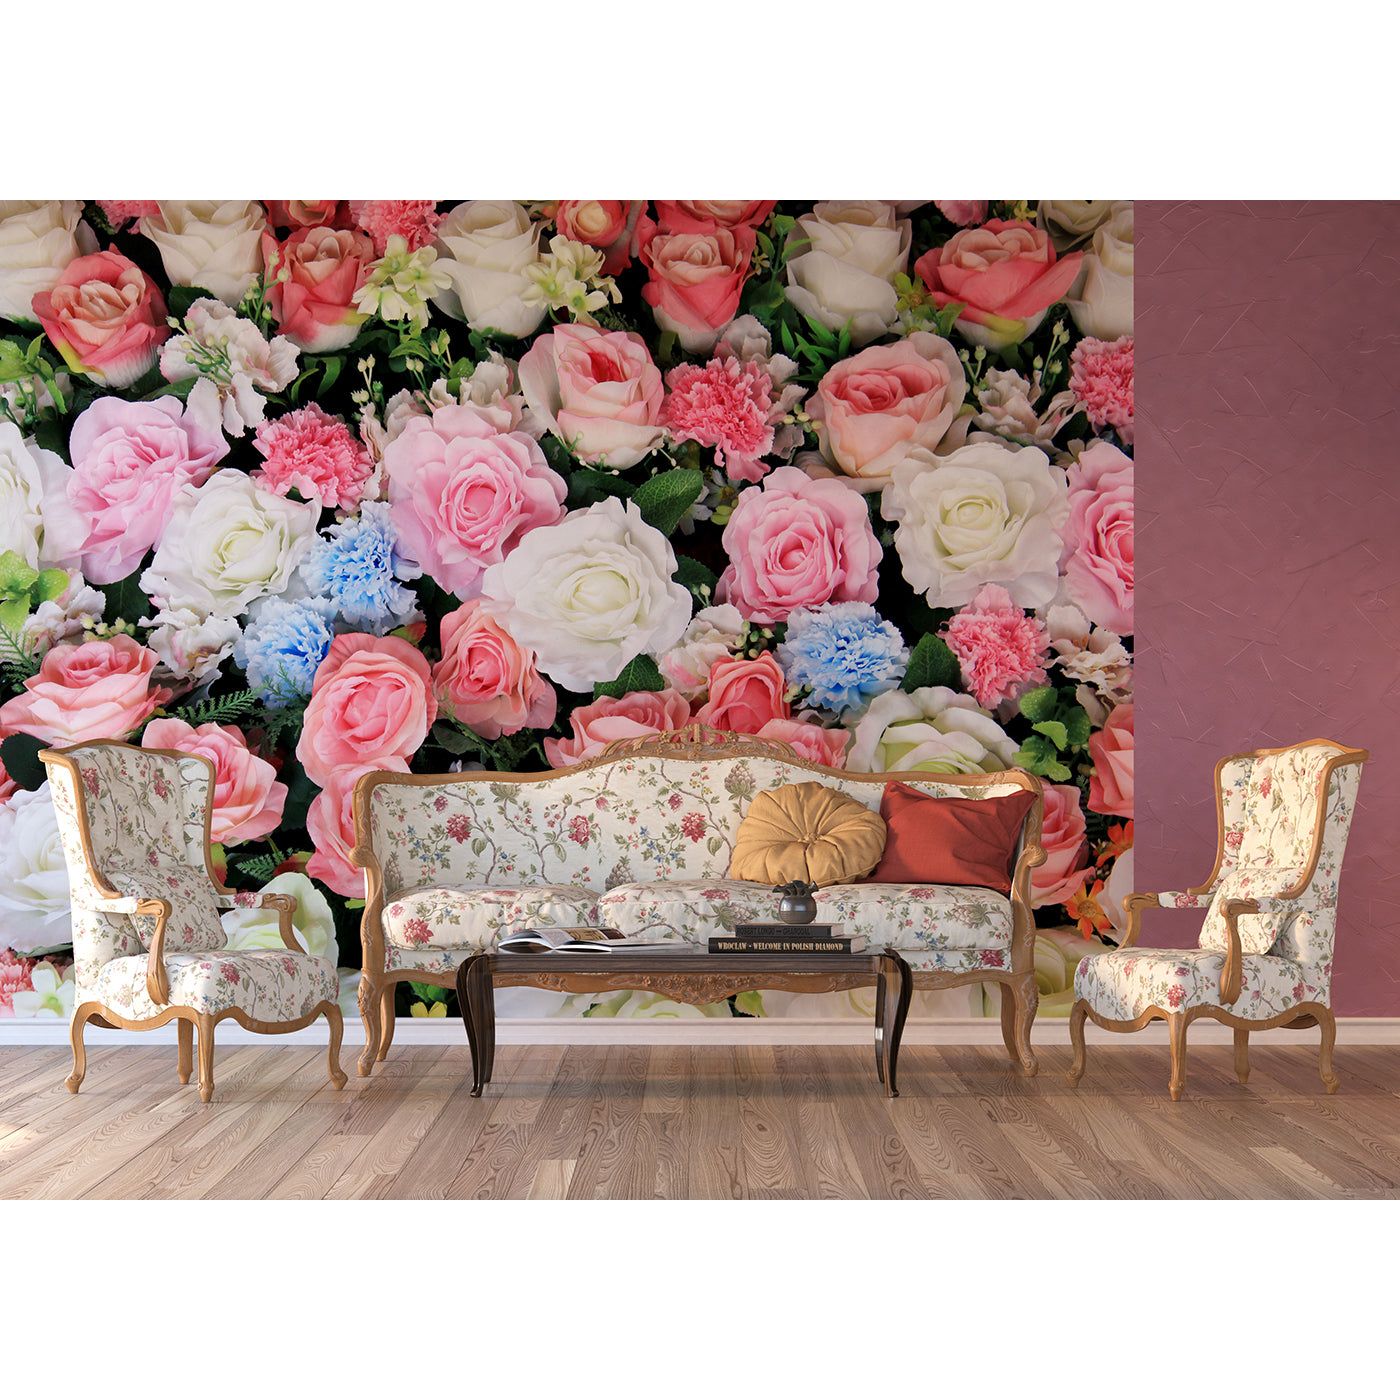 Floral Symphony: Enchanted Garden Wall Mural